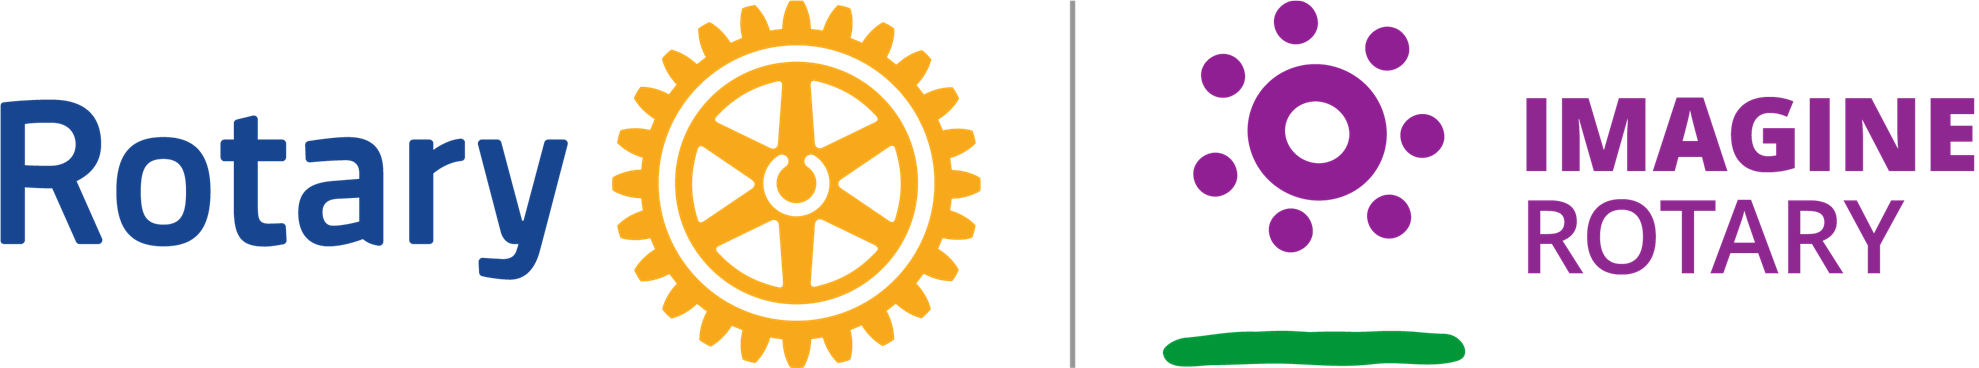 Twinsburg logo